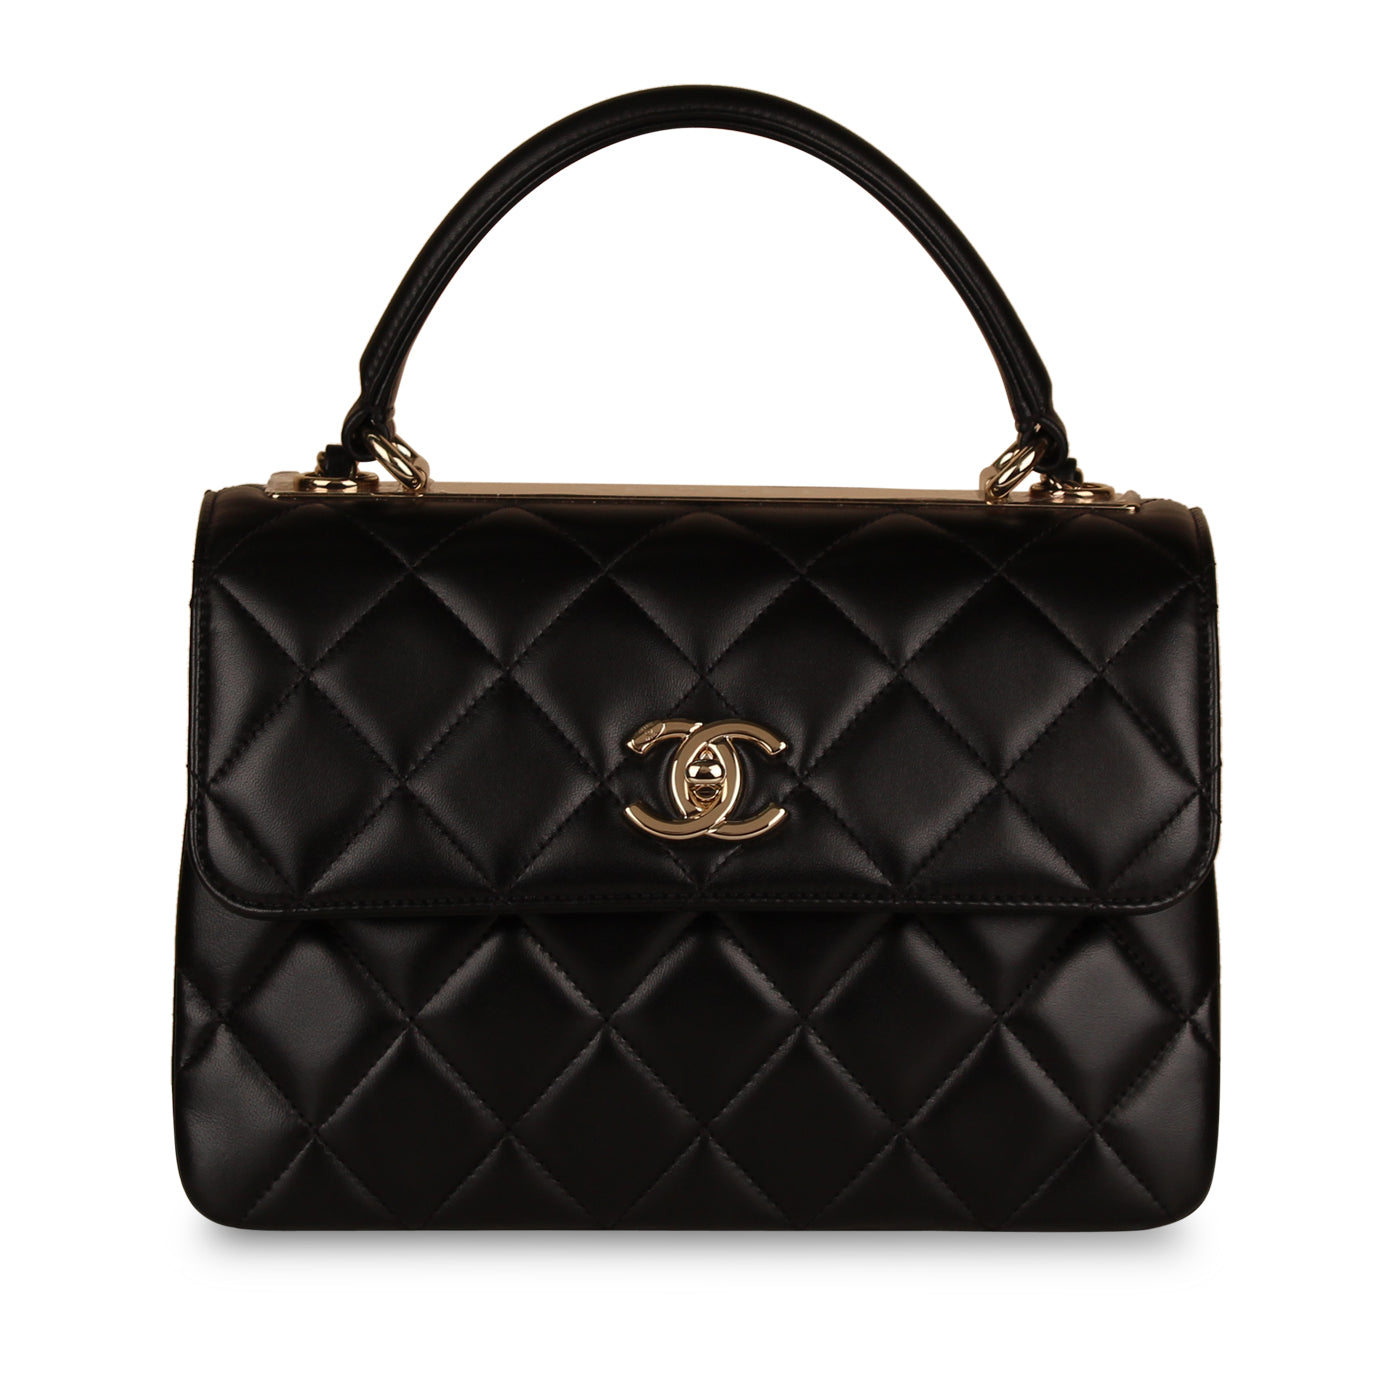 Chanel - Small Trendy CC Flap Bag - Black Lambskin - Brand new